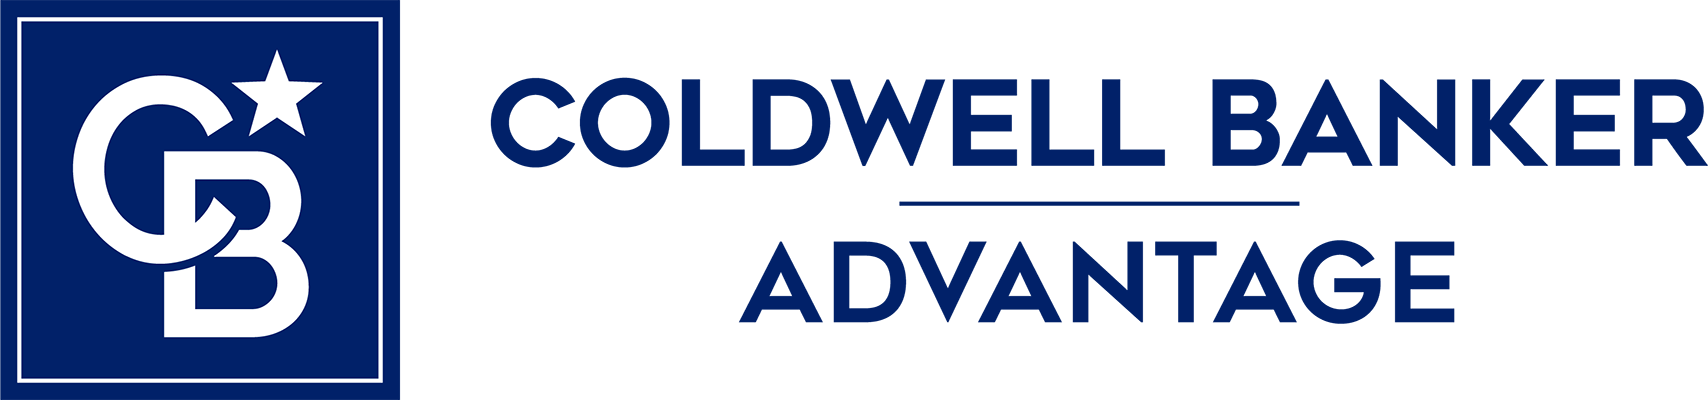 Louise Doing - Coldwell Banker Advantage Logo